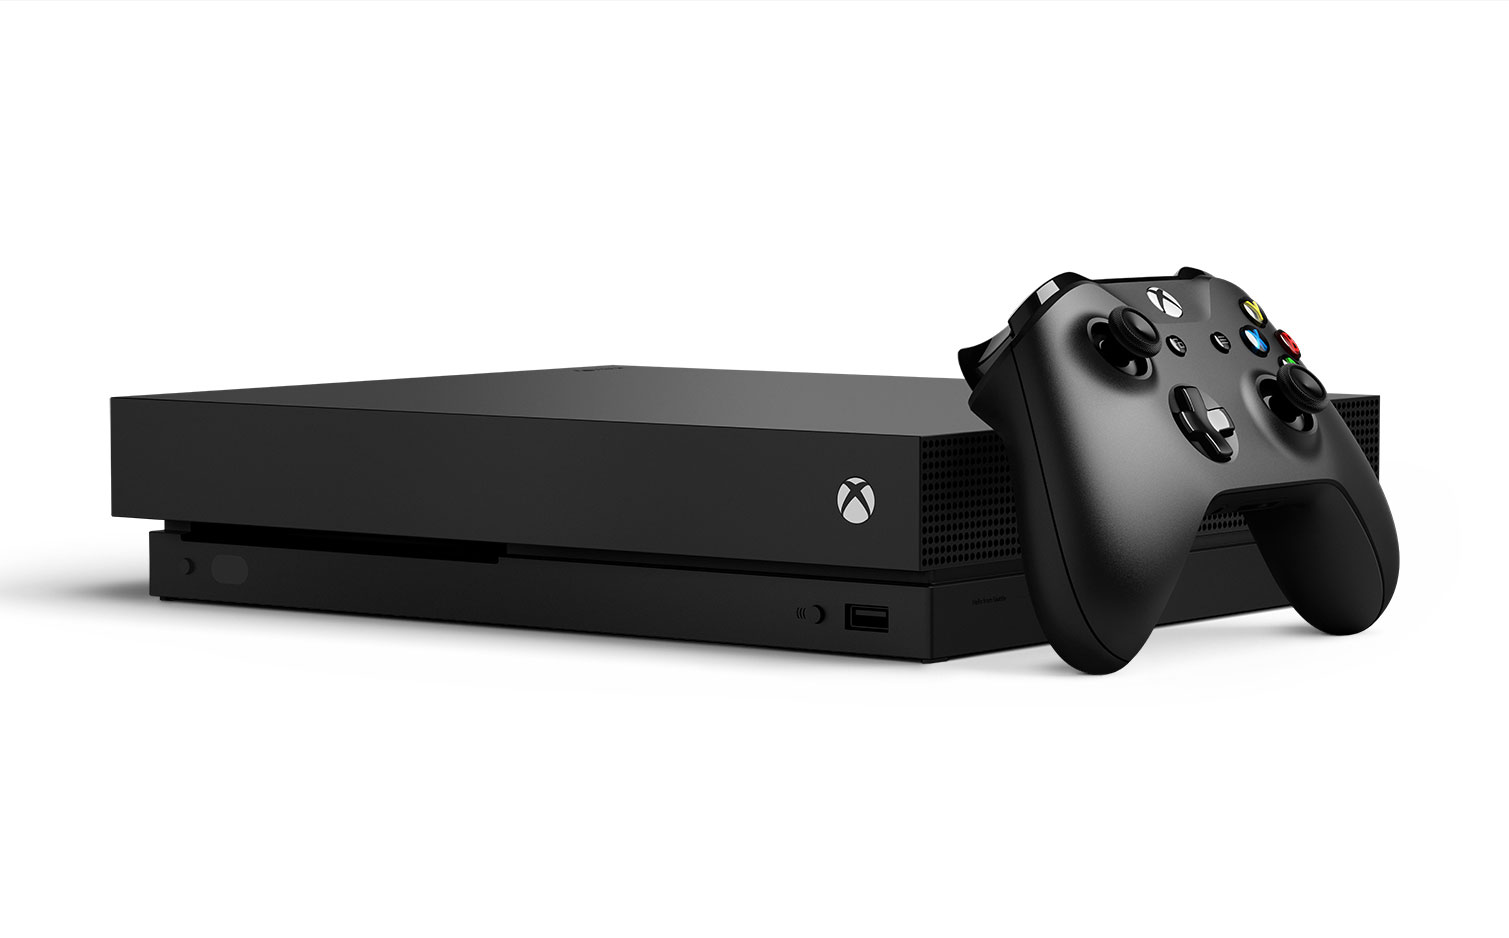 Ist am 7. November offiziell erschienen, aber bei uns kaum zu bekommen: Microsofts 4K-Konsole Xbox One X.